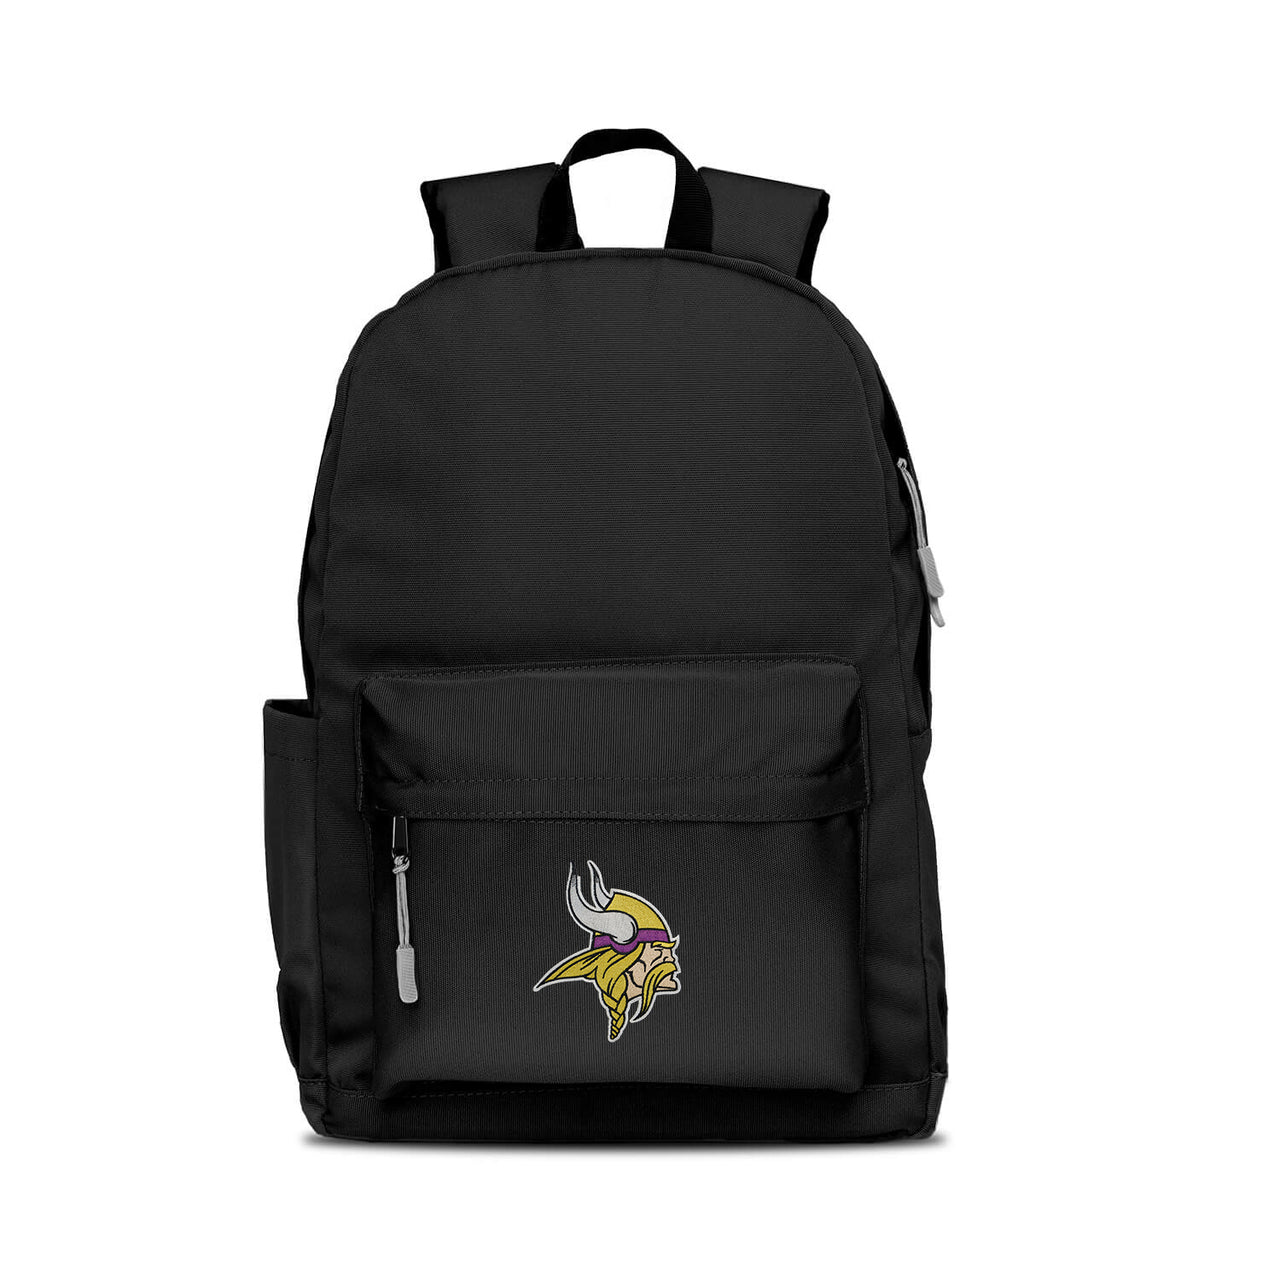 Mojo Minnesota Vikings Premium Laptop Tote Bag and Luggage Set